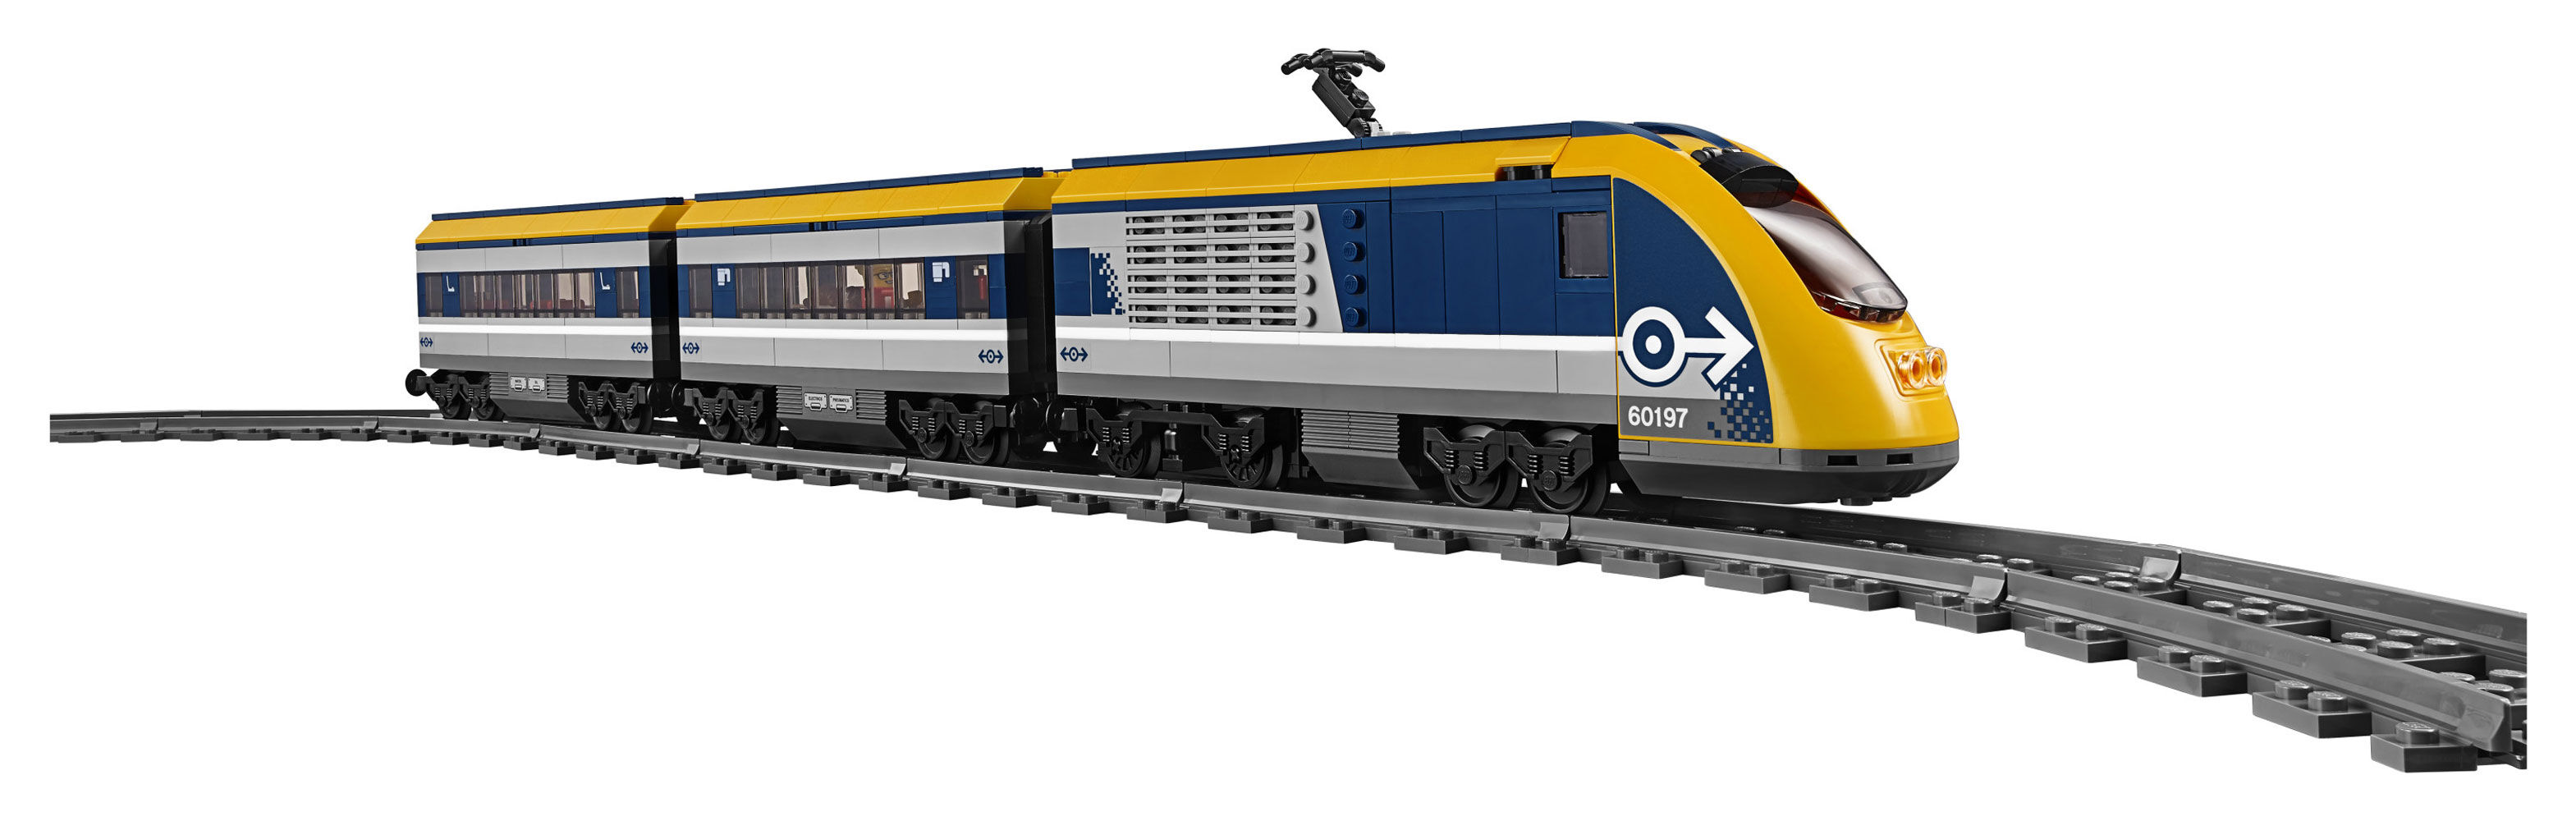 lego city train set 60197